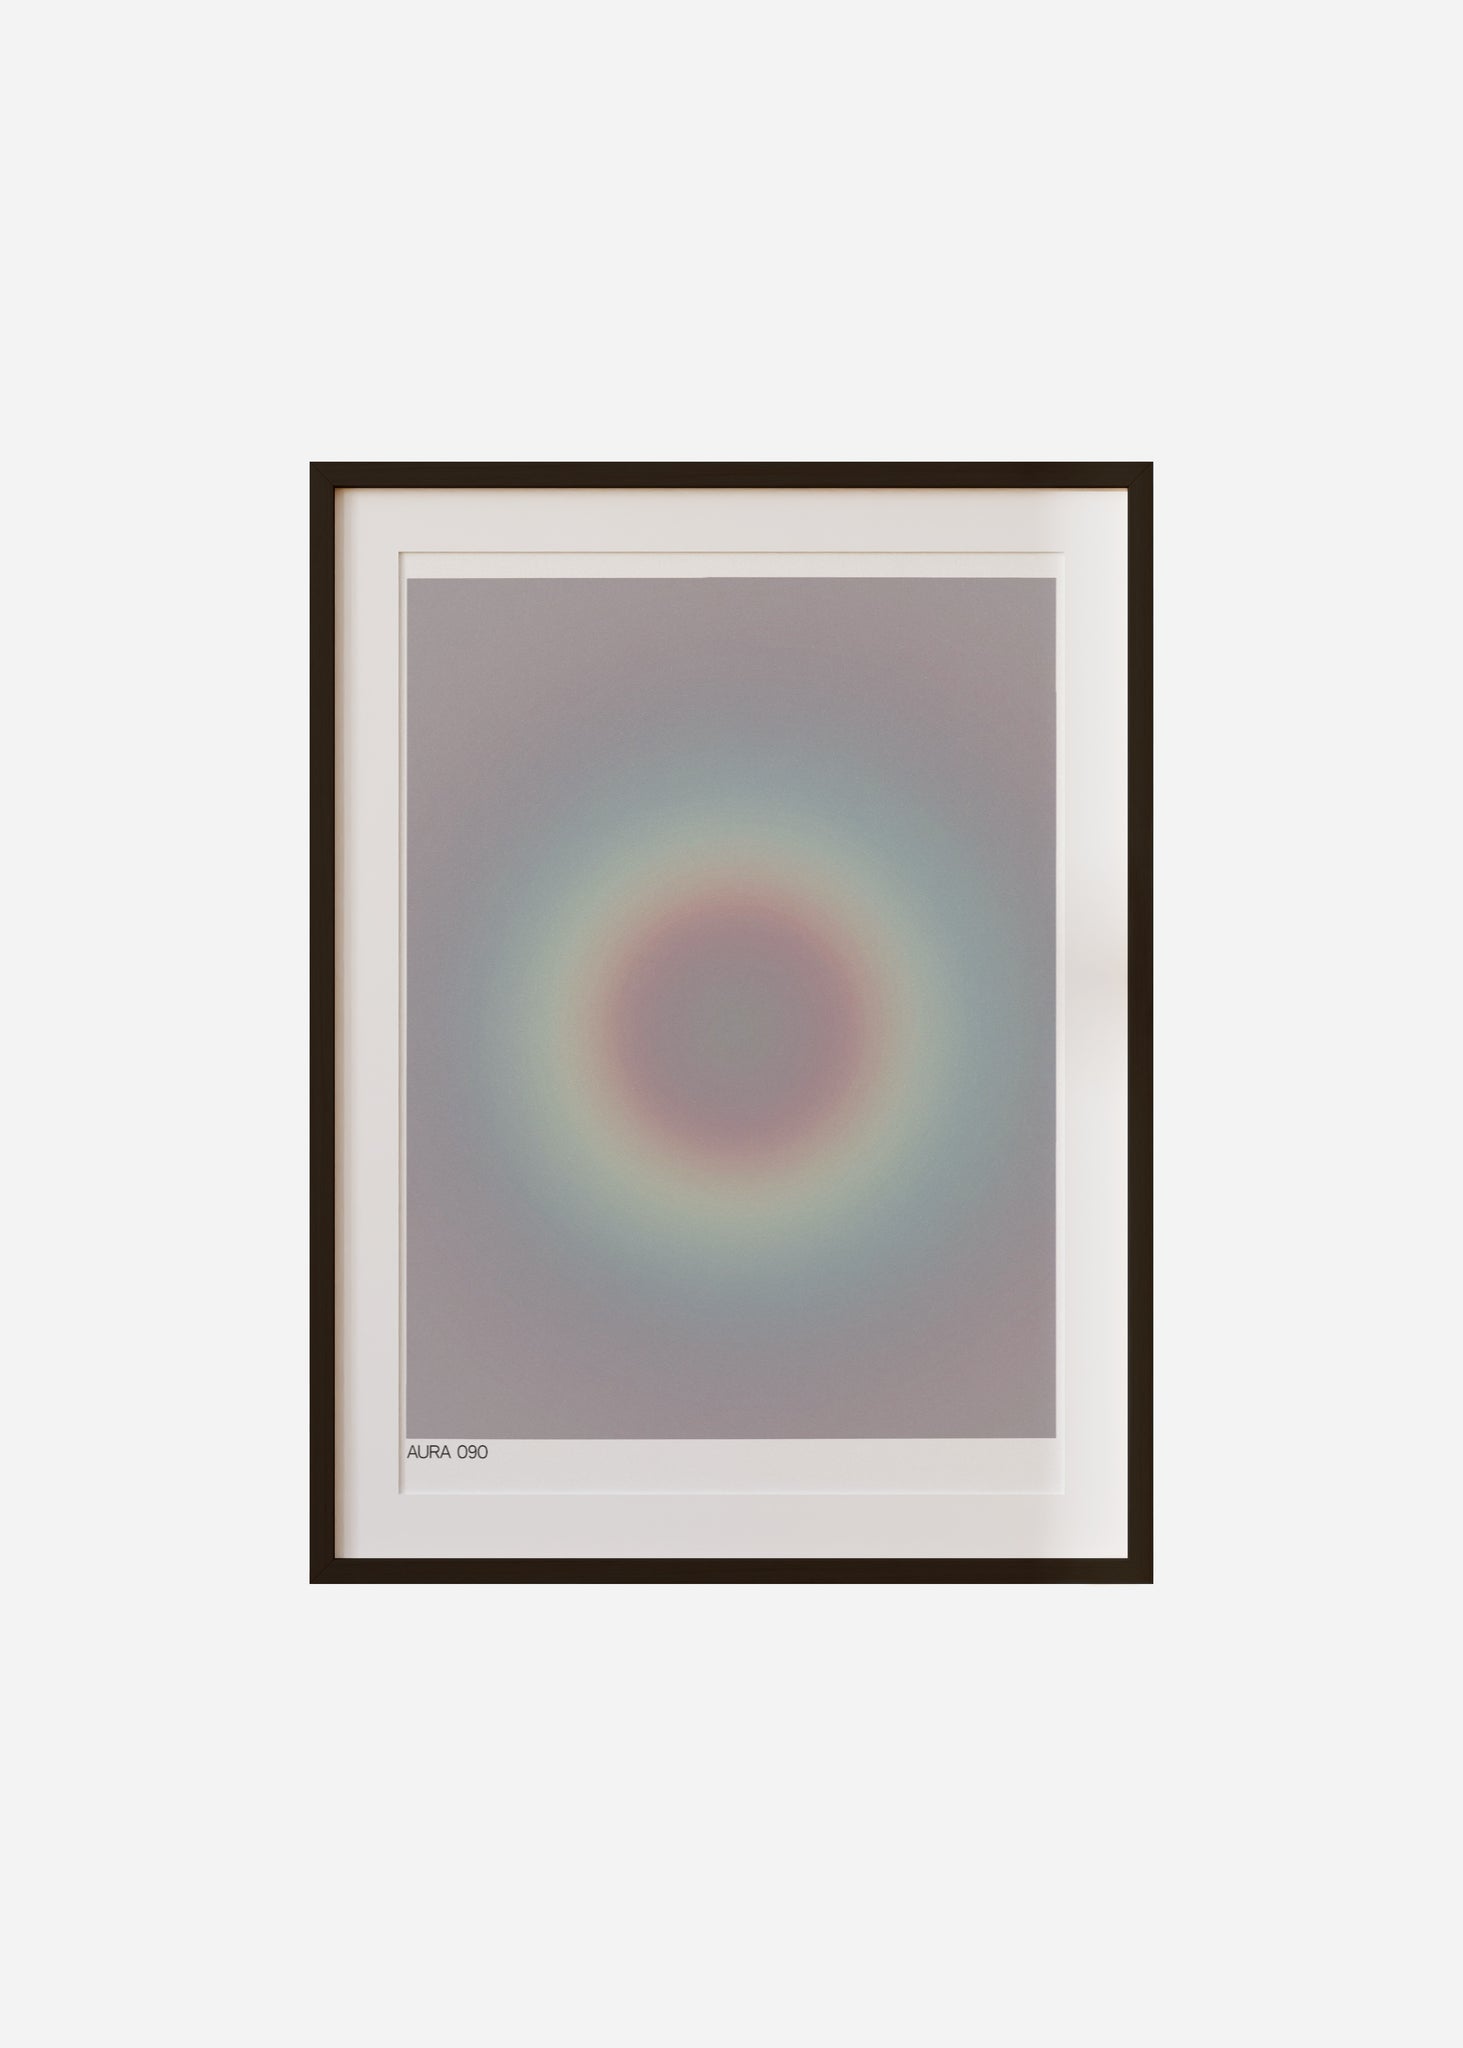 aura 090 Framed & Mounted Print